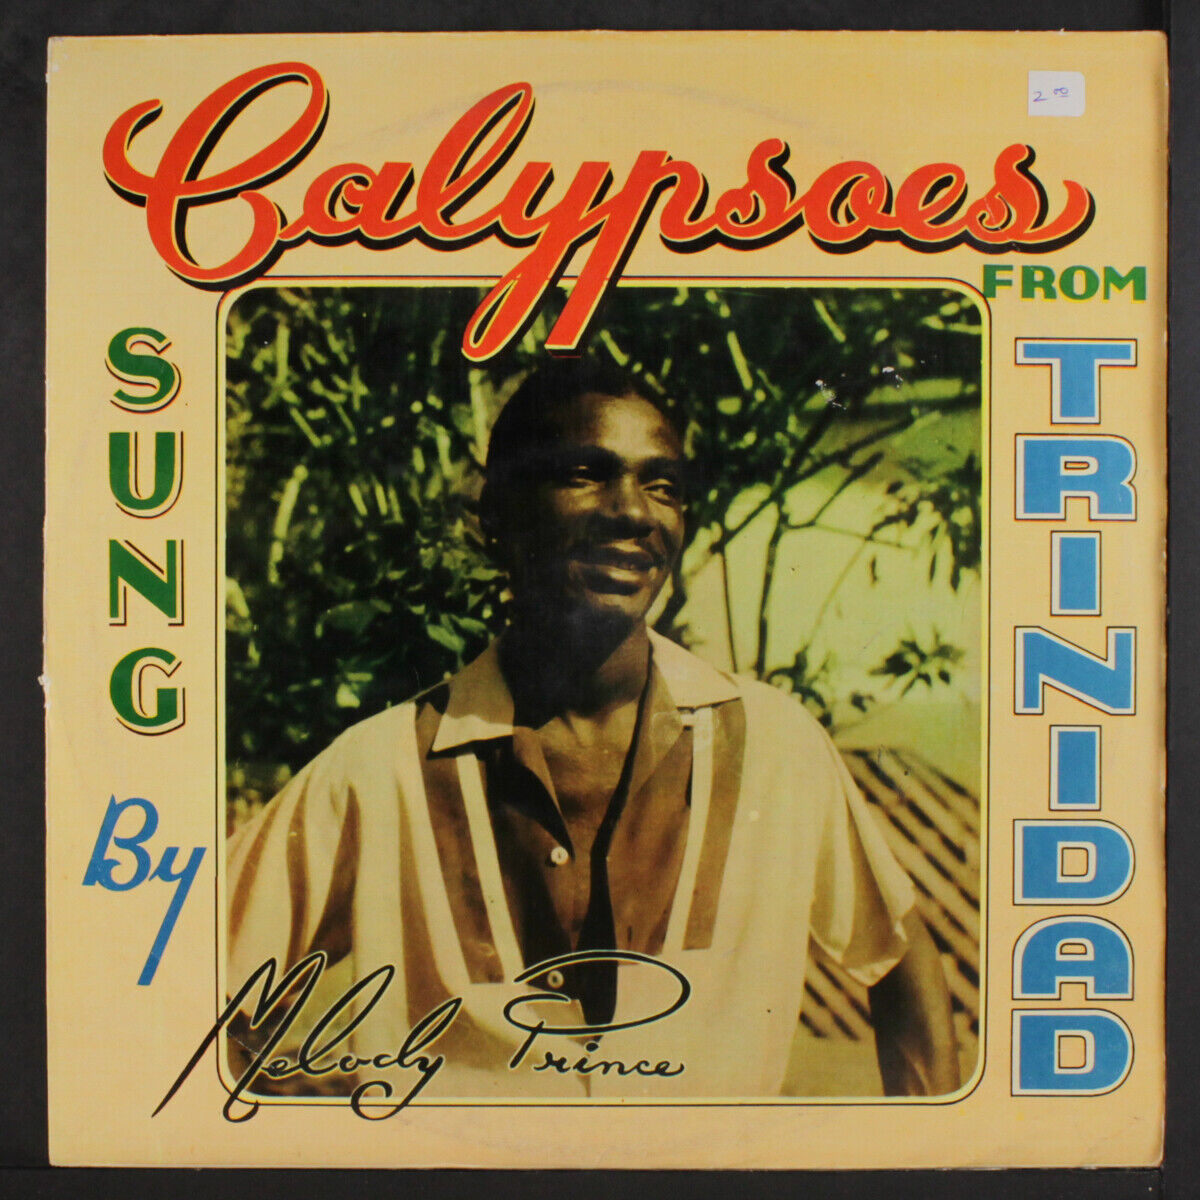 CALYPSO PRINCE: calypsoes from trinidad sung by melody prince VITADISC 12" LP